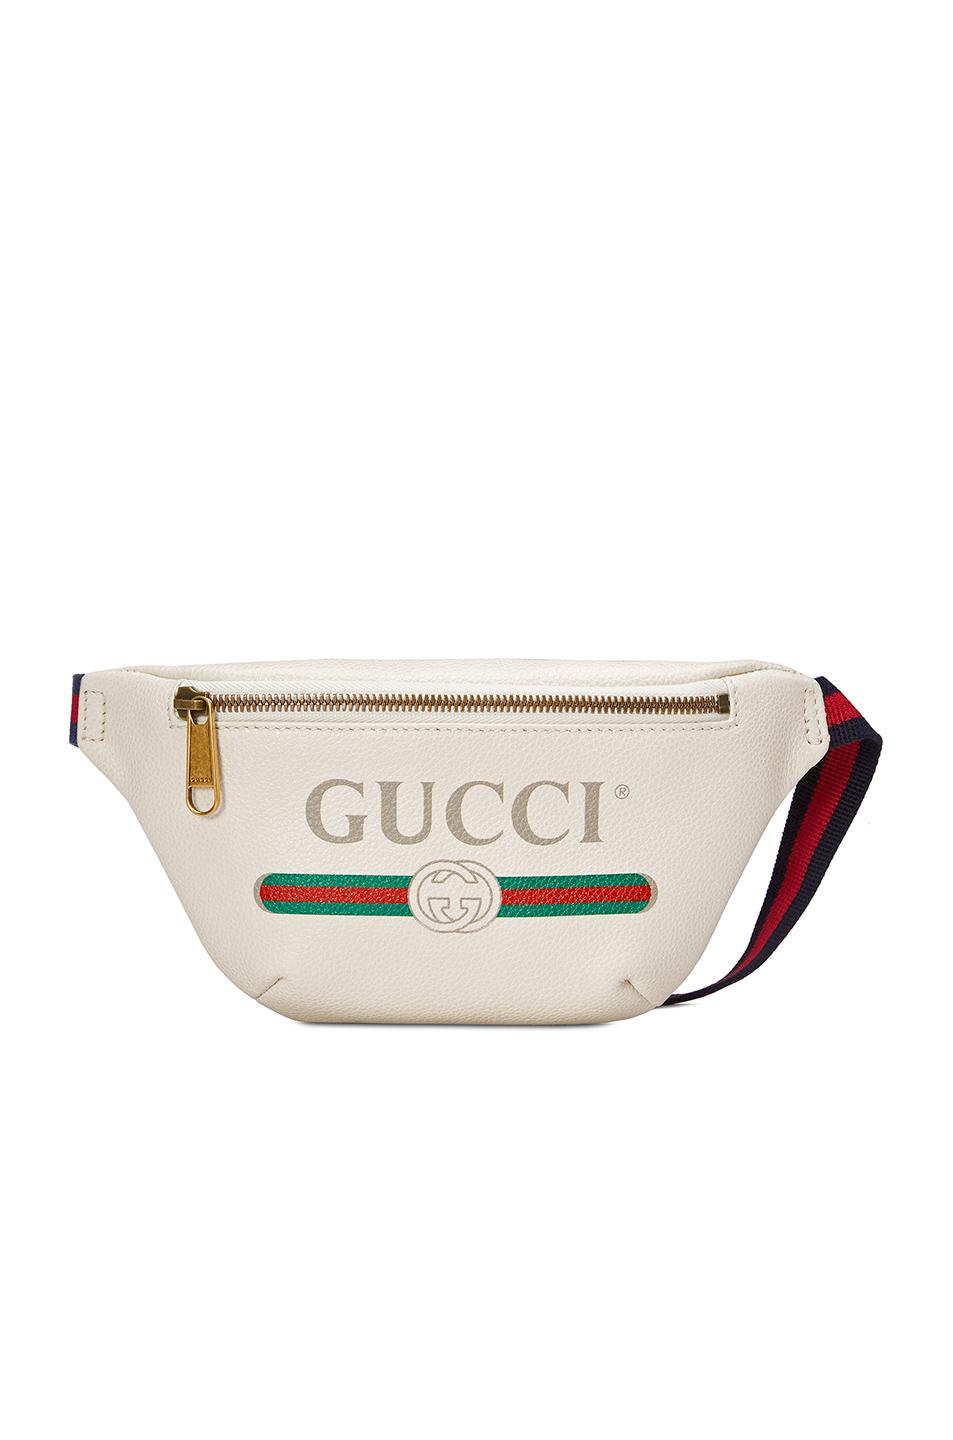 gucci logo print belt bag